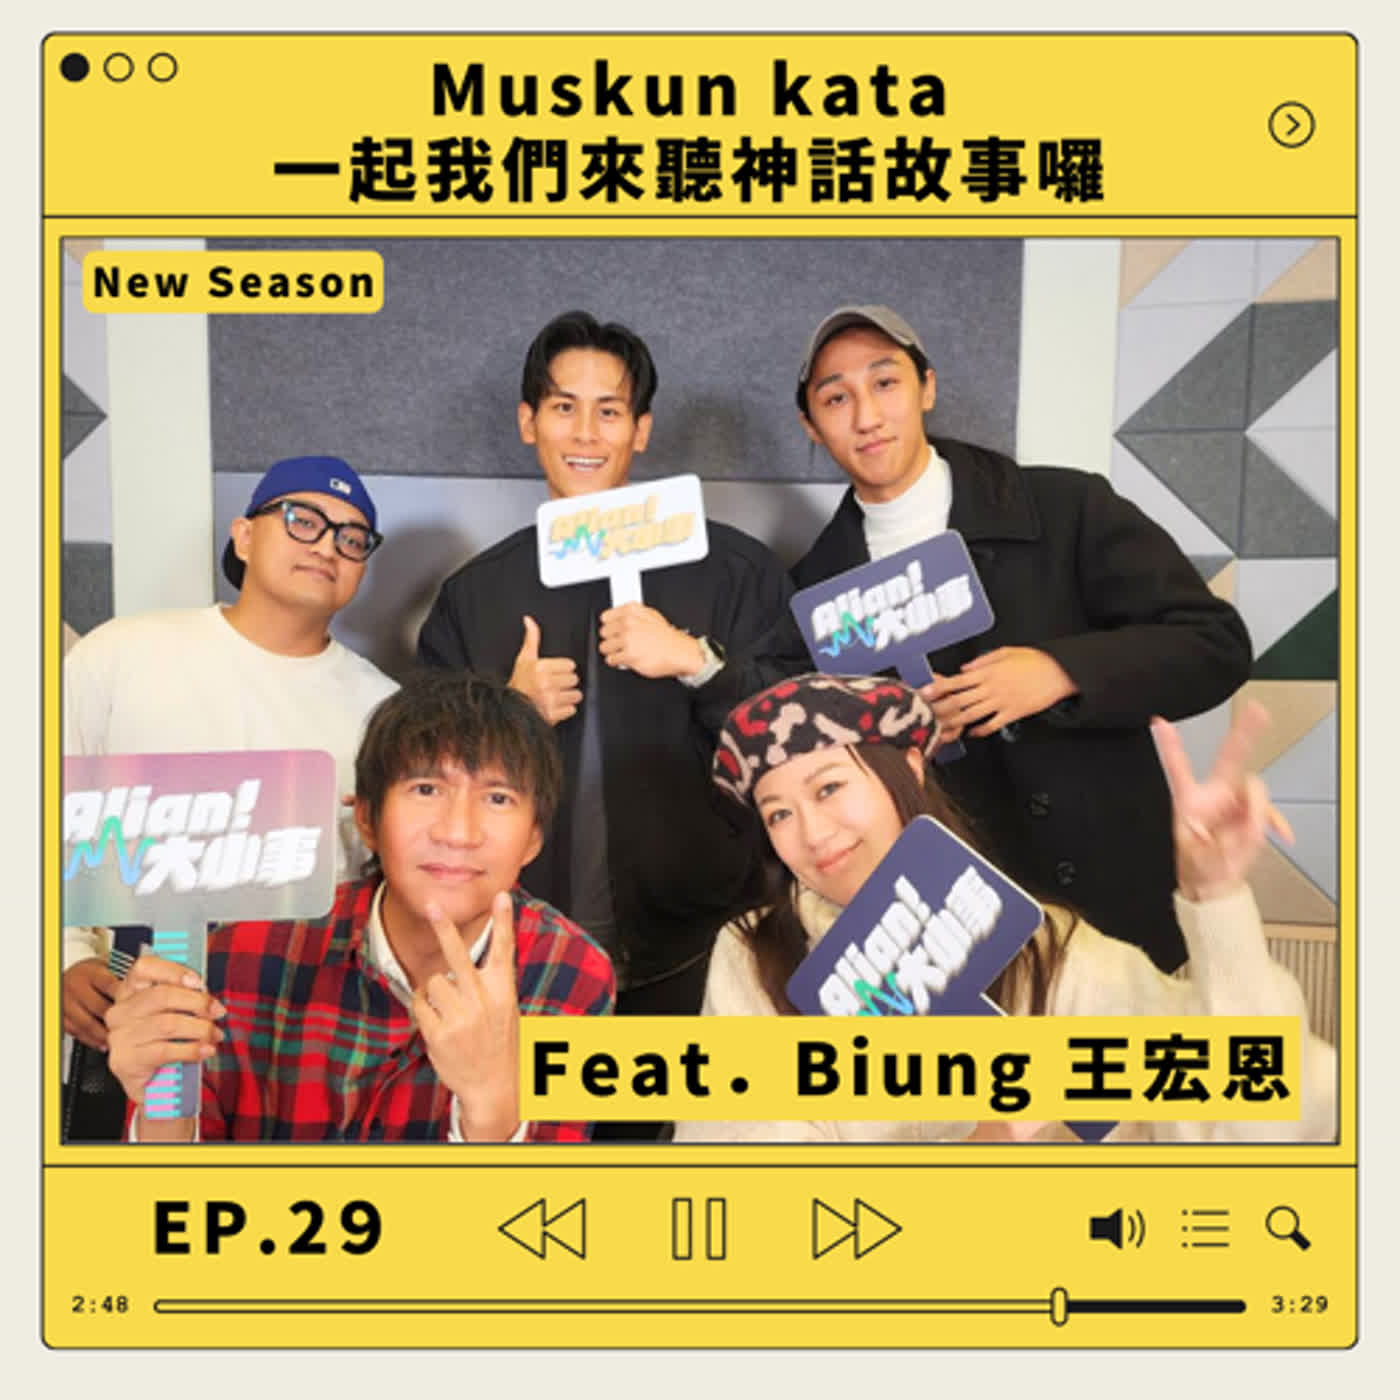 EP.29 | Muskun kata一起我們來聽神話故事囉  Feat. Biung 王宏恩